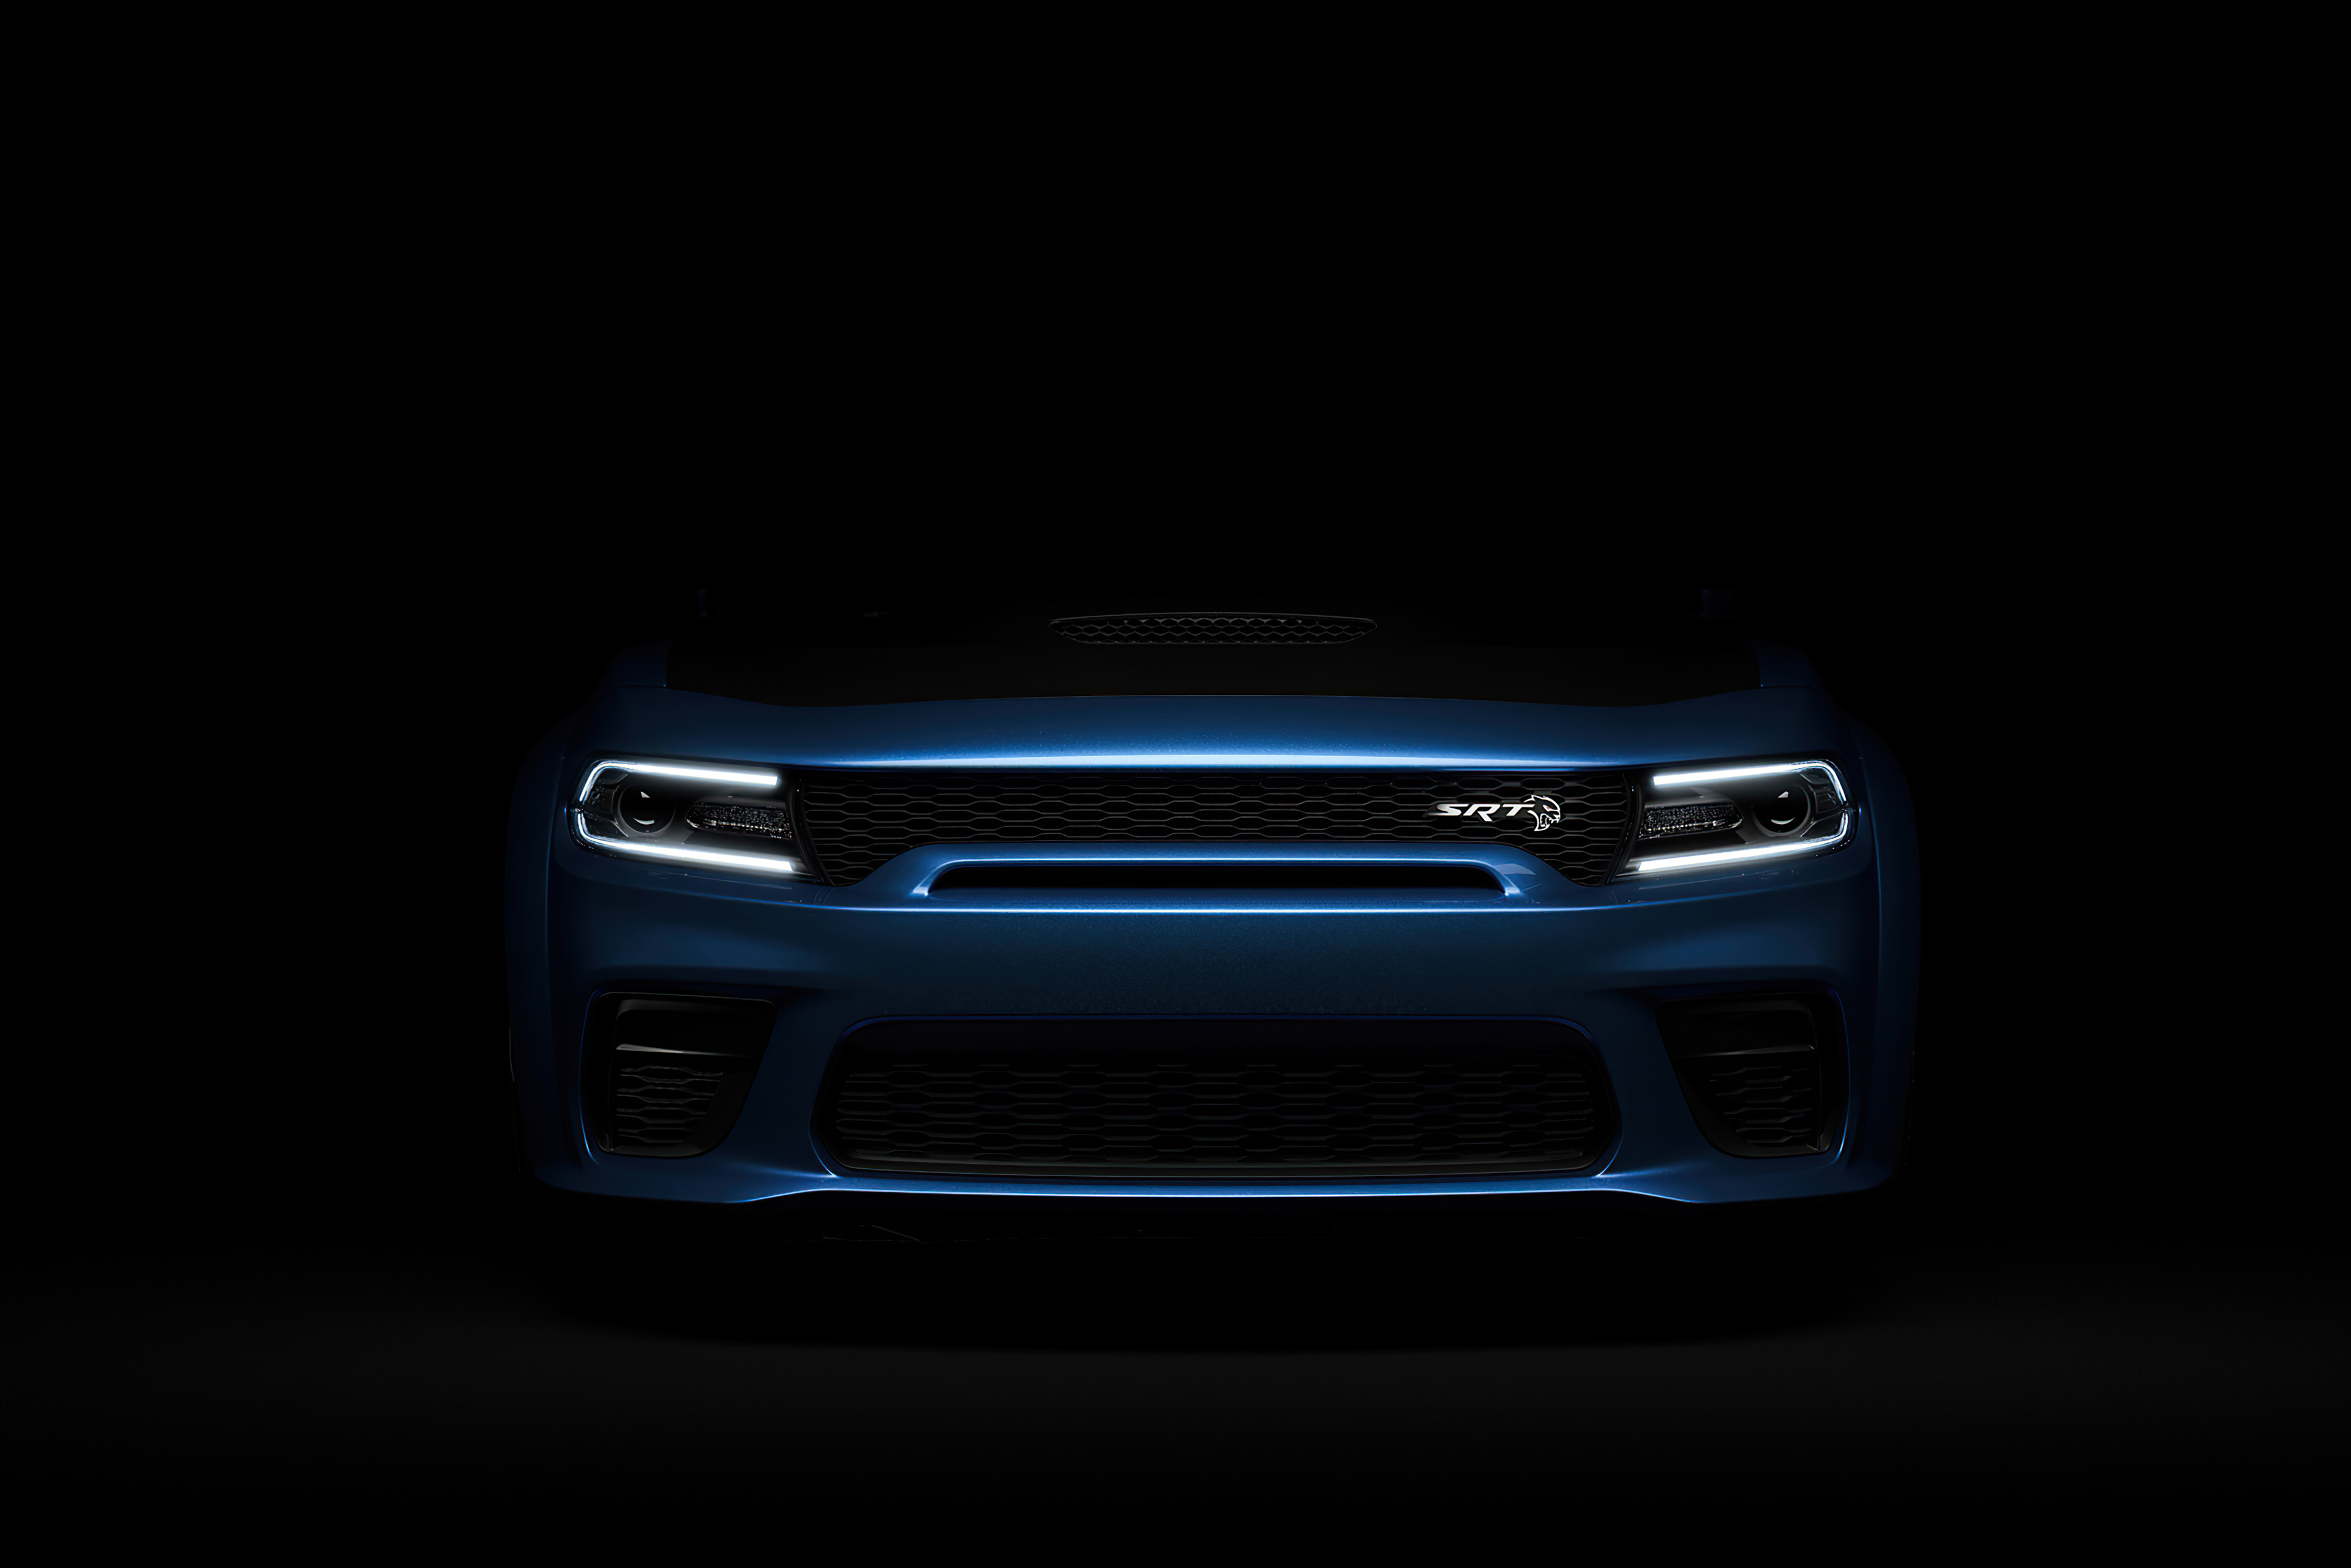 Dodge Challenger Srt Hellcat Widebody silhouette in the dark.